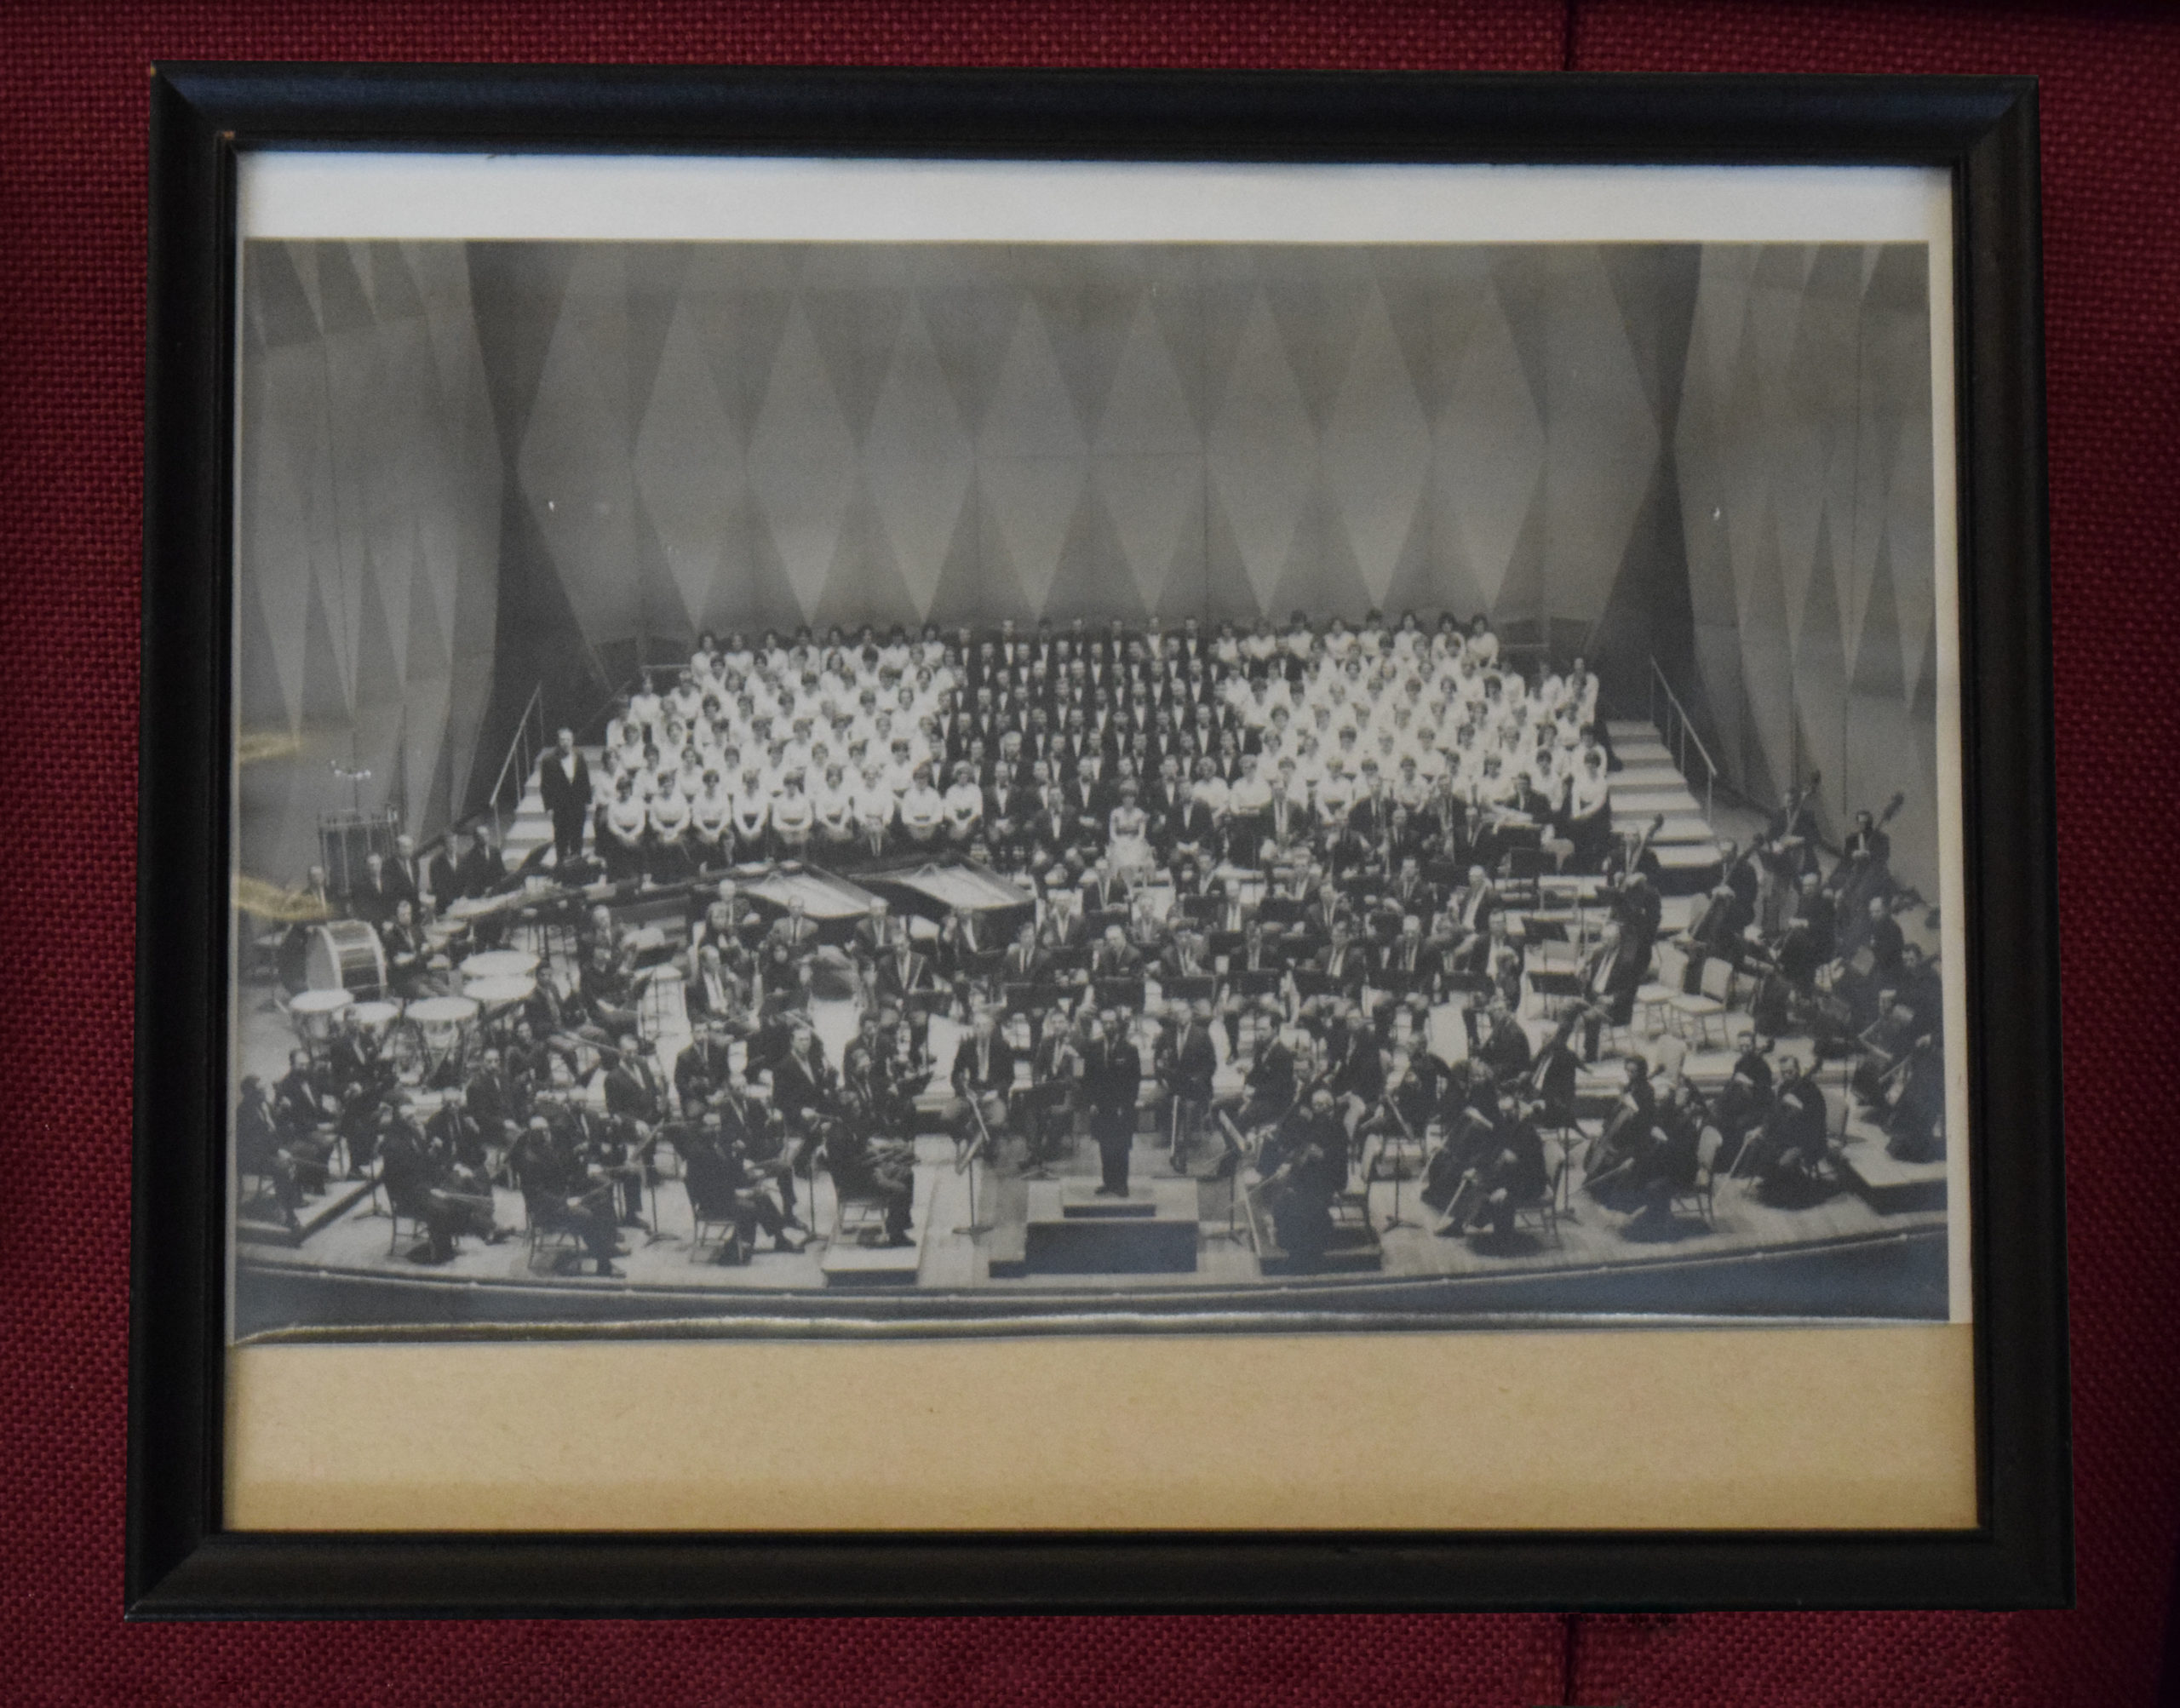 MN Symphony Orchestra performs Orff’s Carmina Burana (1962)